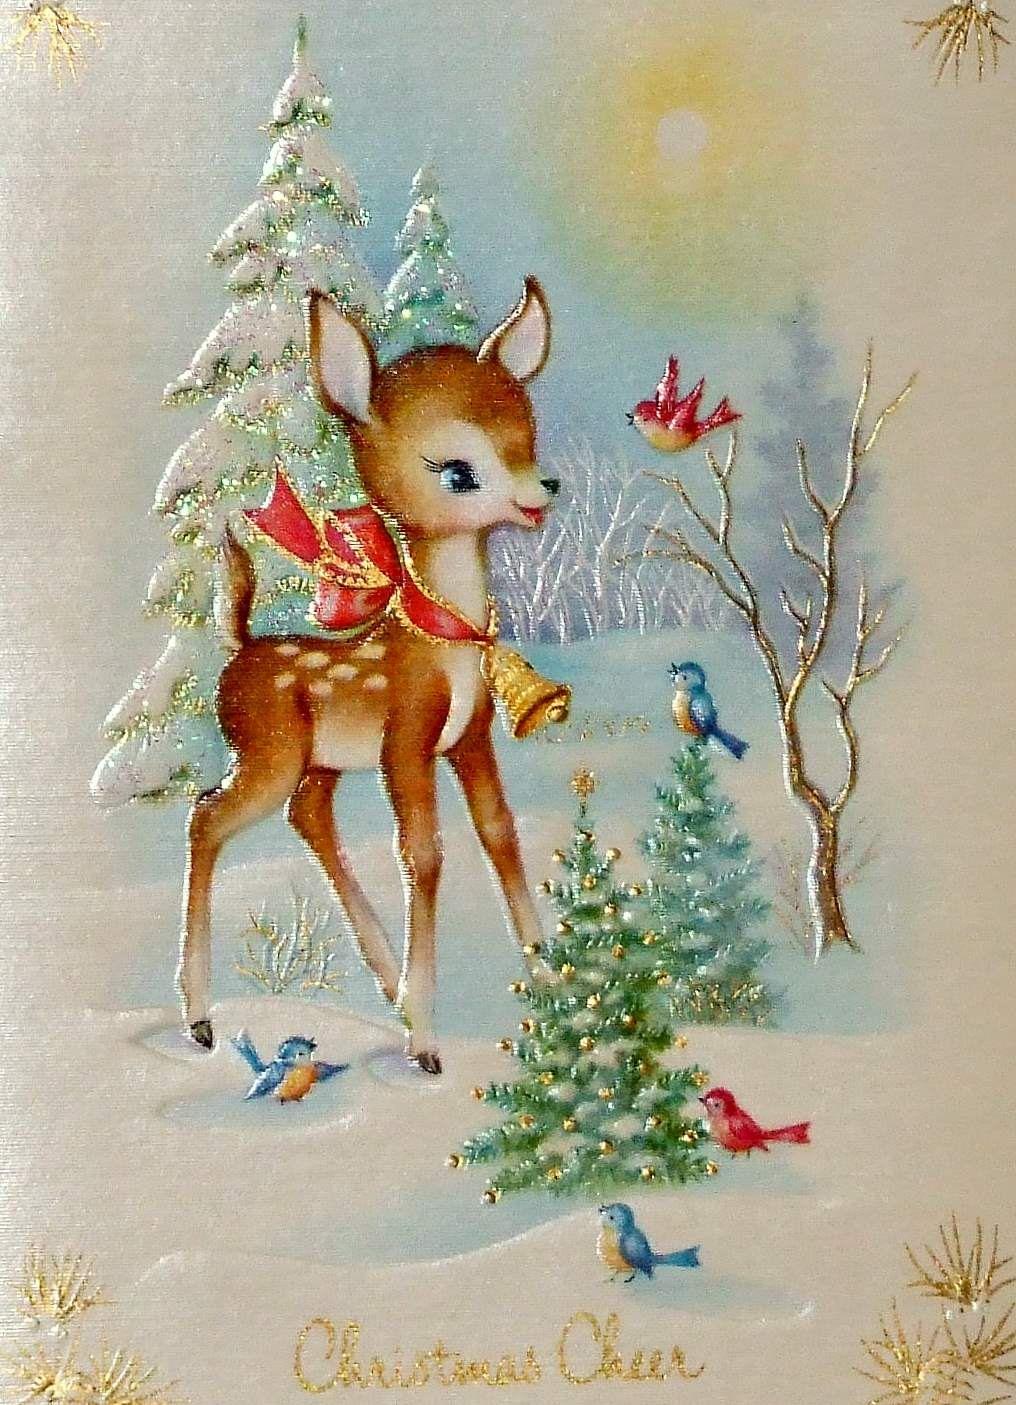 Vintage 50 S Christmas Wallpaper Explore and share popular christmas ...